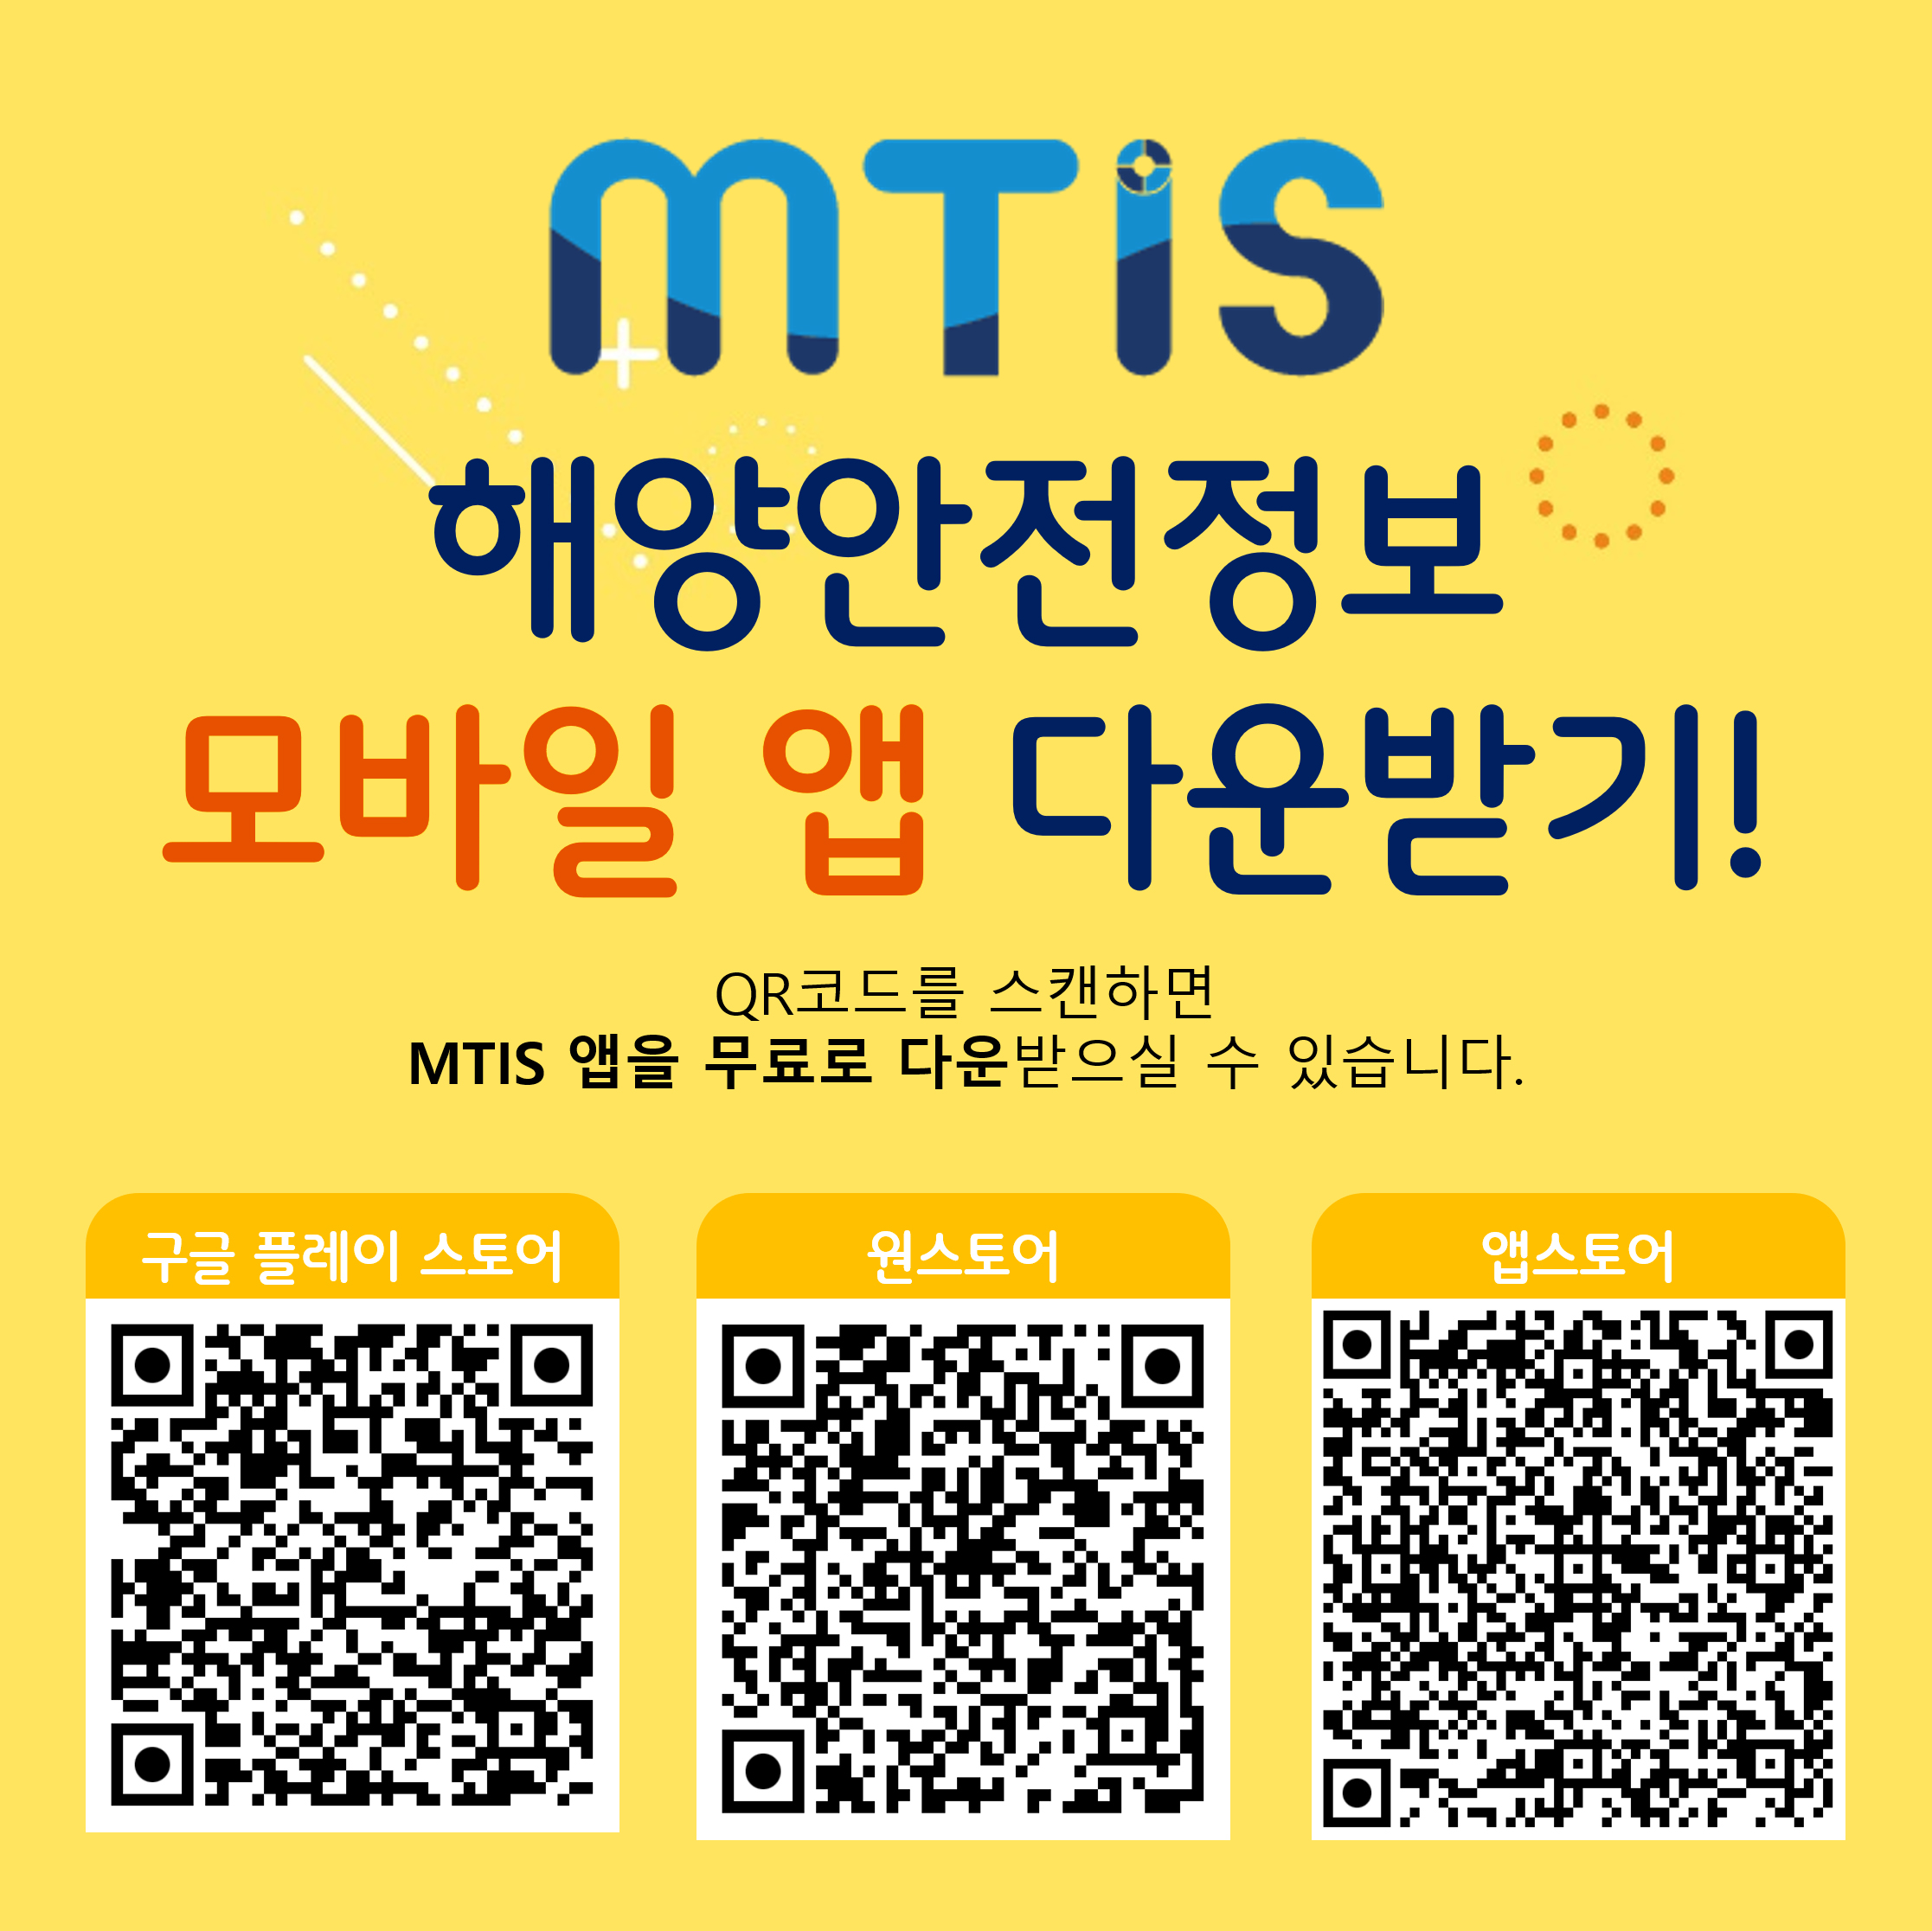 MTIS 해양안전정보 모바일 앱 다운받기!
QR코드를 스캔하면 MTIS 앱을 무료로 다운 받으실수 있습니다.
구글 플레이 스토어 : https://play.google.com/store/apps/details;jsessionid=A5247E2641AC0249450E72A1534CFE7E?id=kr.or.komsa.mtis
원스토어 : https://m.onestore.co.kr/mobilepoc/apps/appsDetail.omp?prodId=0000771271
앱스토어 : https://apps.apple.com/kr/app/%ED%95%B4%EC%96%91%EA%B5%90%ED%86%B5%EC%95%88%EC%A0%84%EC%A0%95%EB%B3%B4/id6462842483